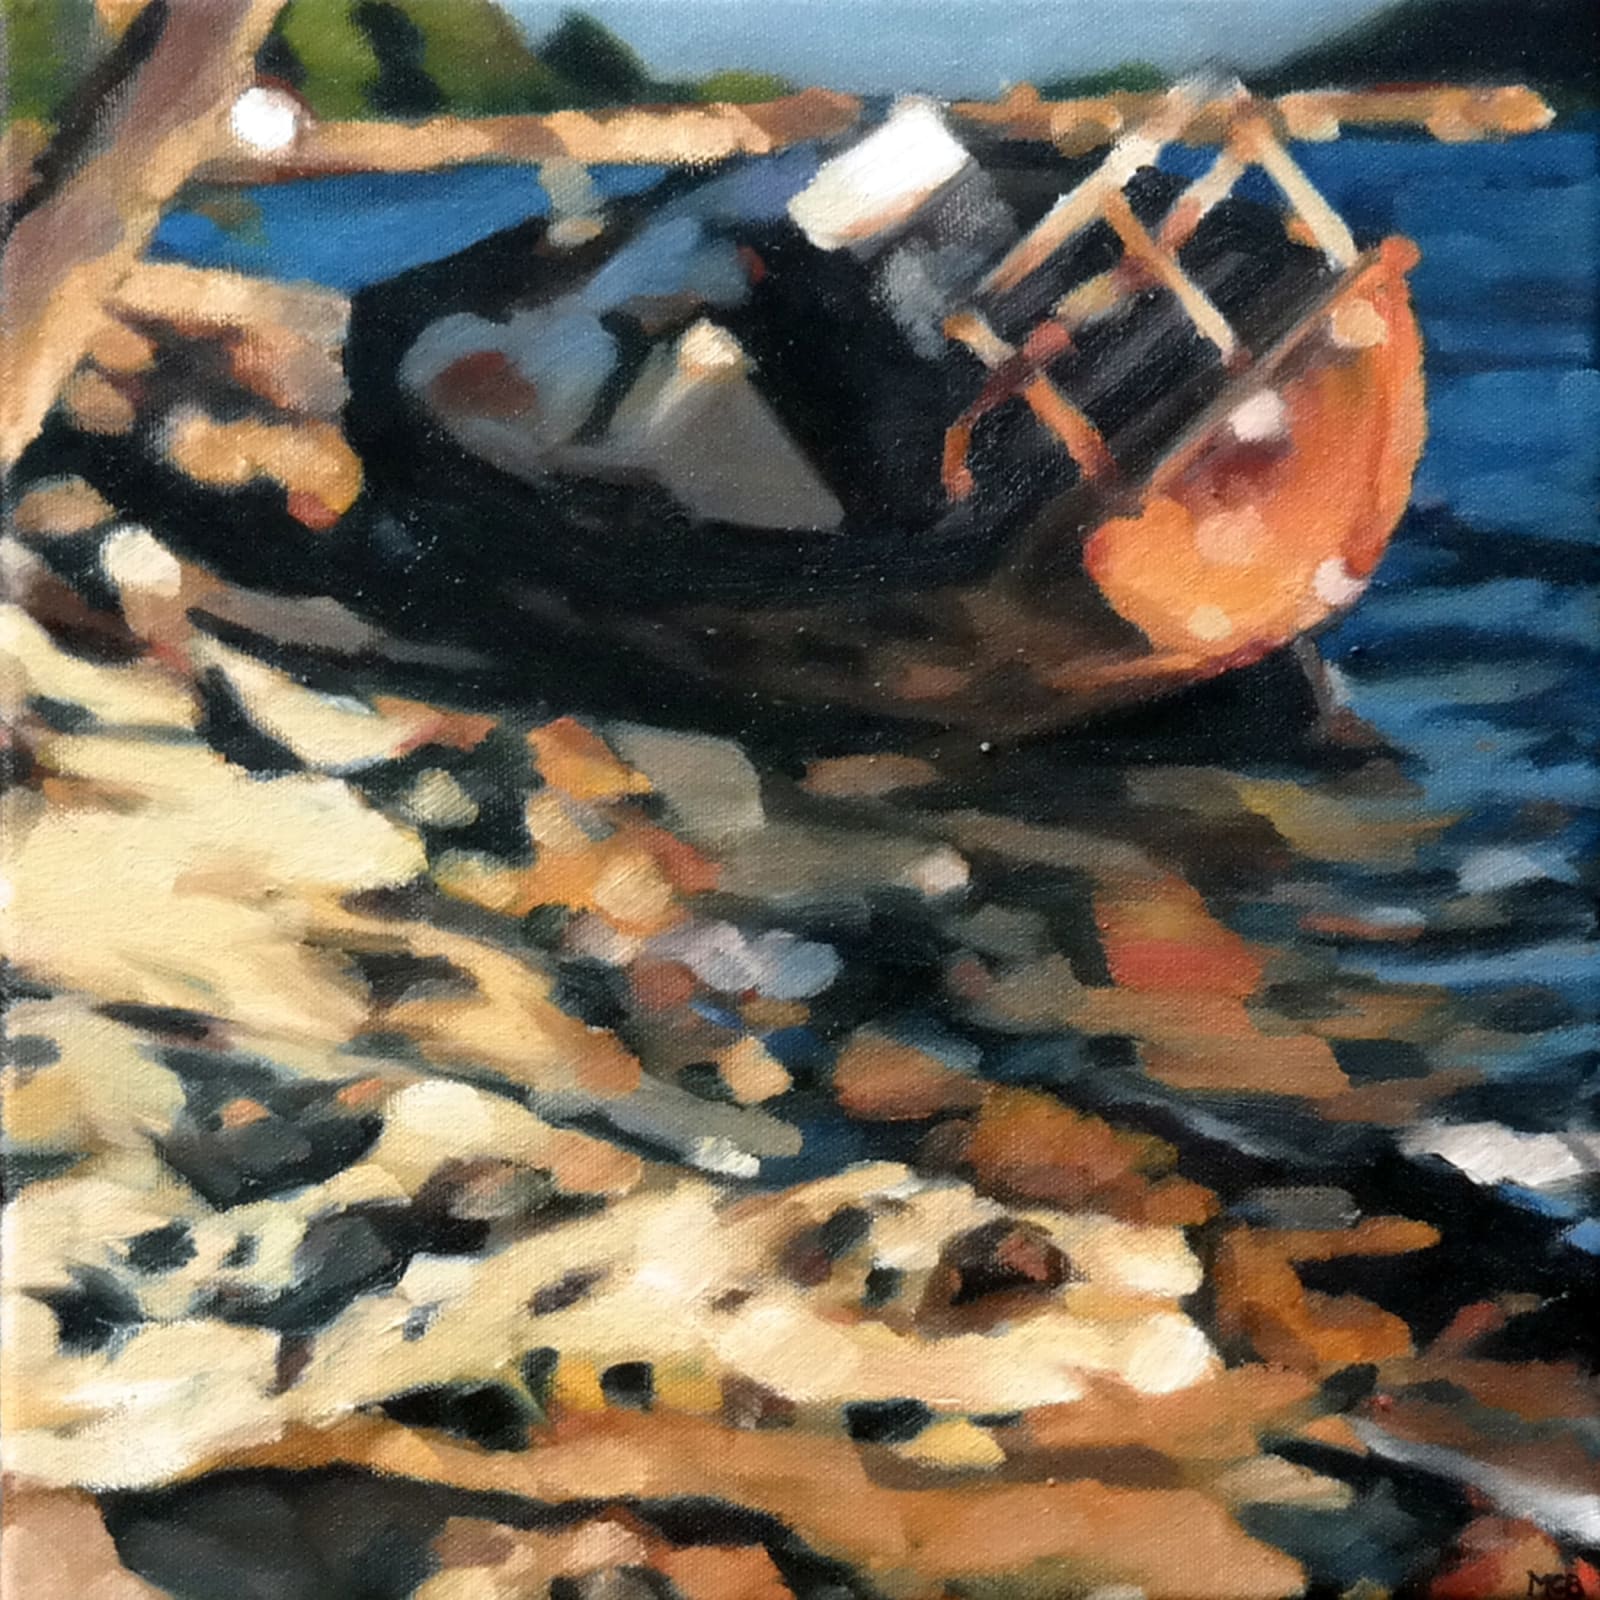 Mishael Coggeshall-Burr, Old Boat, 2016